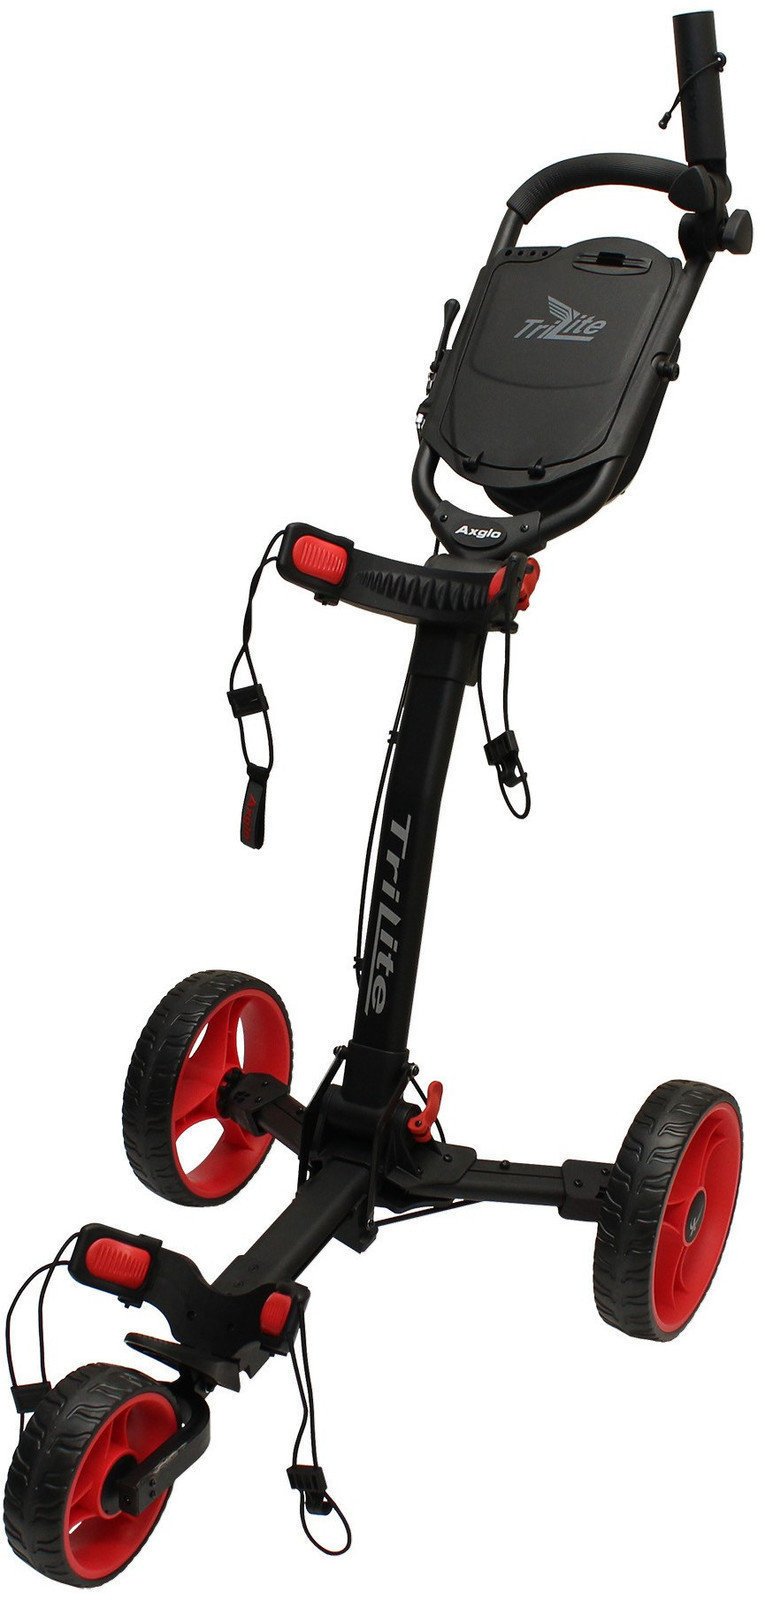 Chariot de golf manuel Axglo TriLite Black/Red Chariot de golf manuel